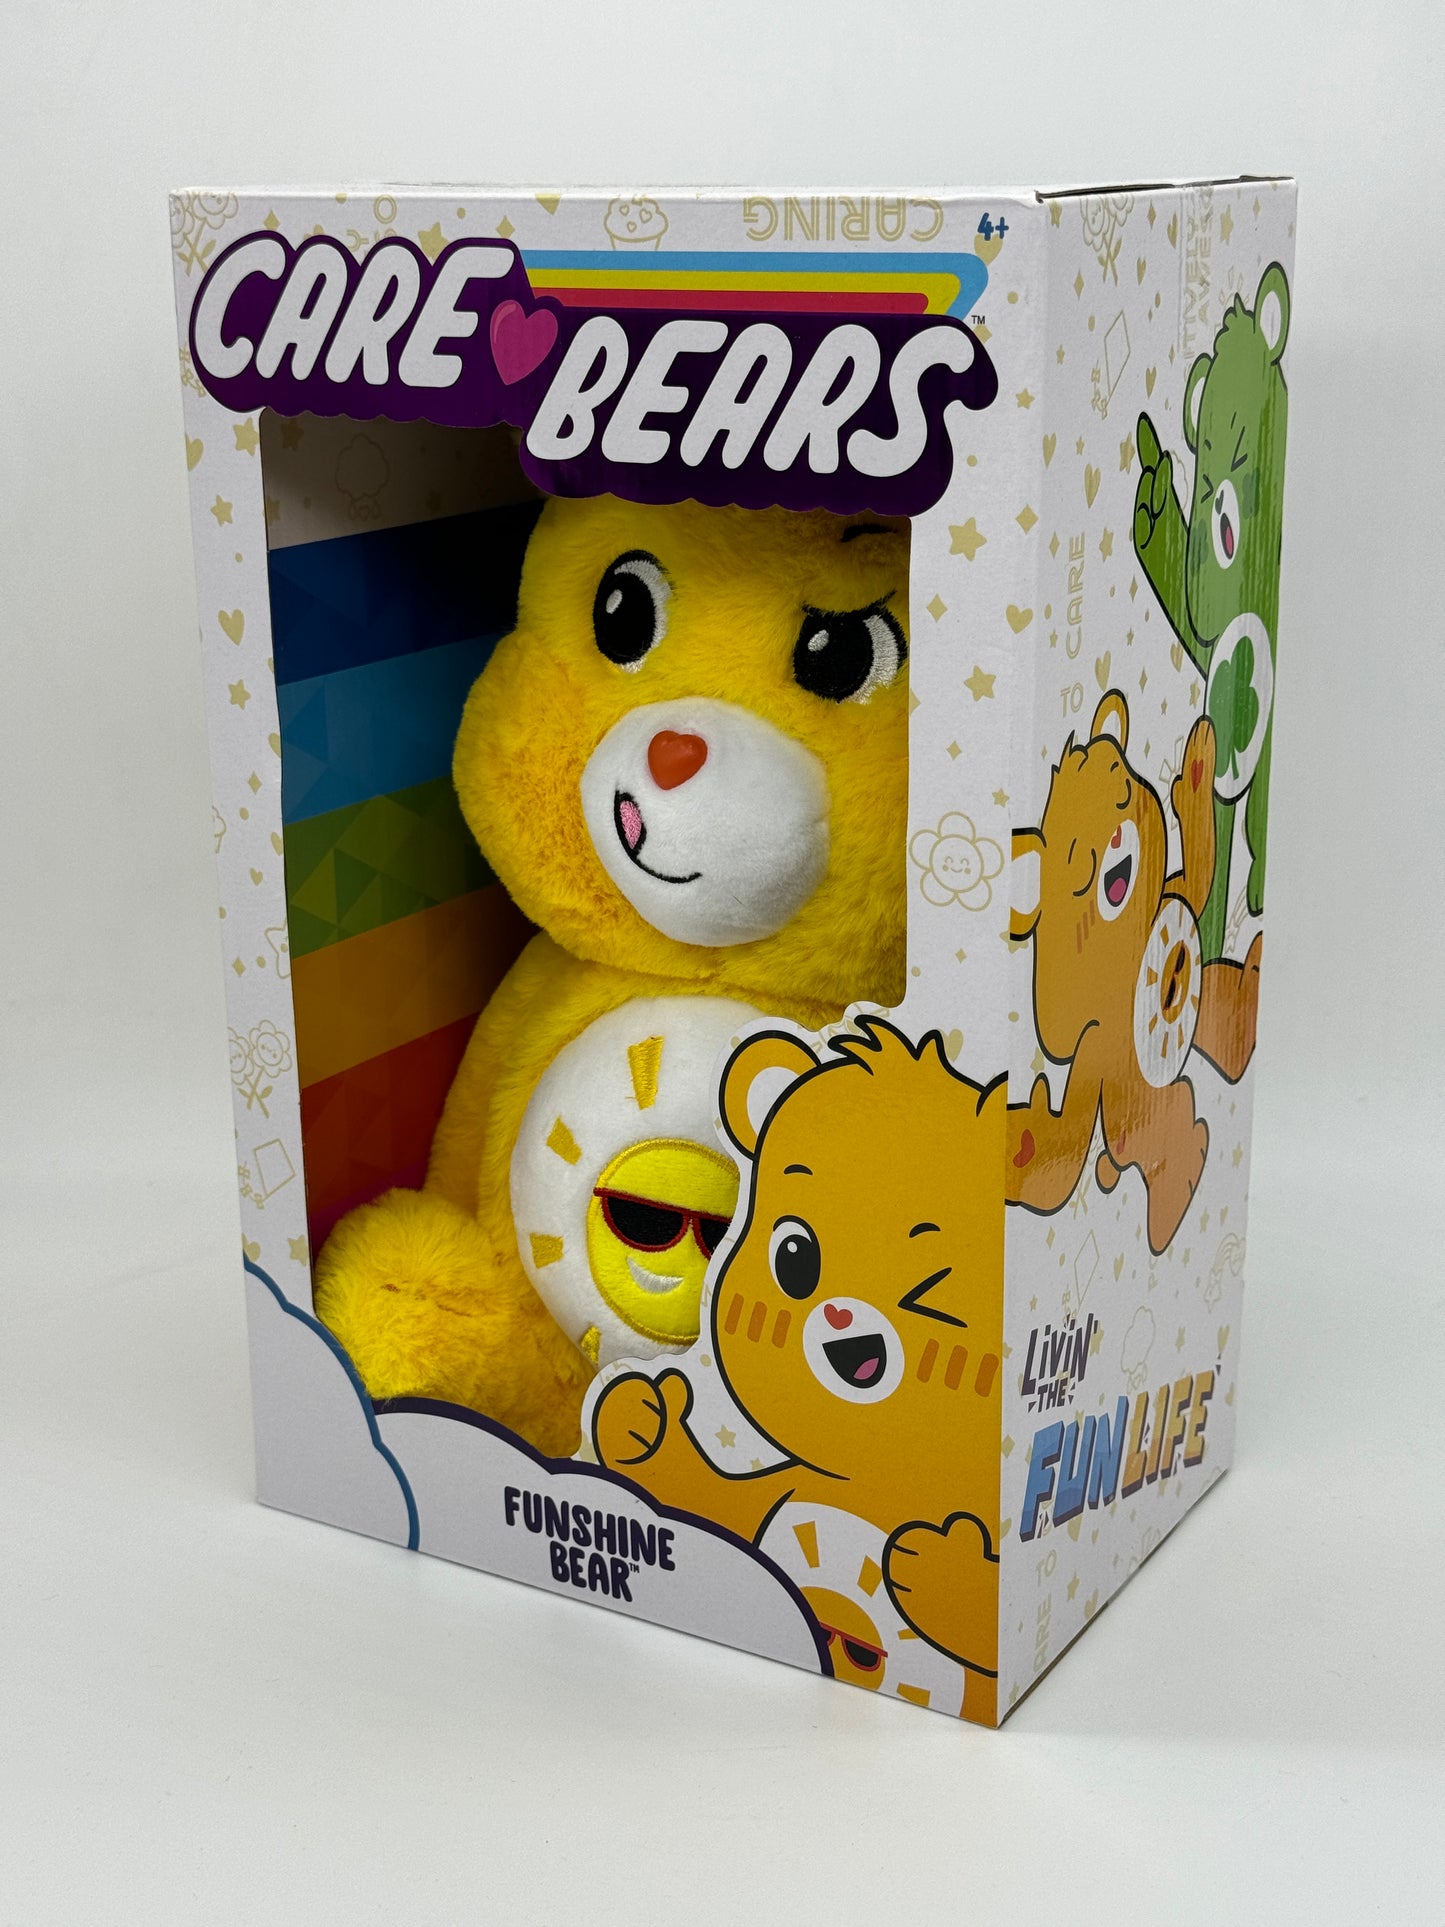 Care Bears Glücksbärchi "Funshine Bear" Kindness Keepers Plüsch / Stofftier (2021)